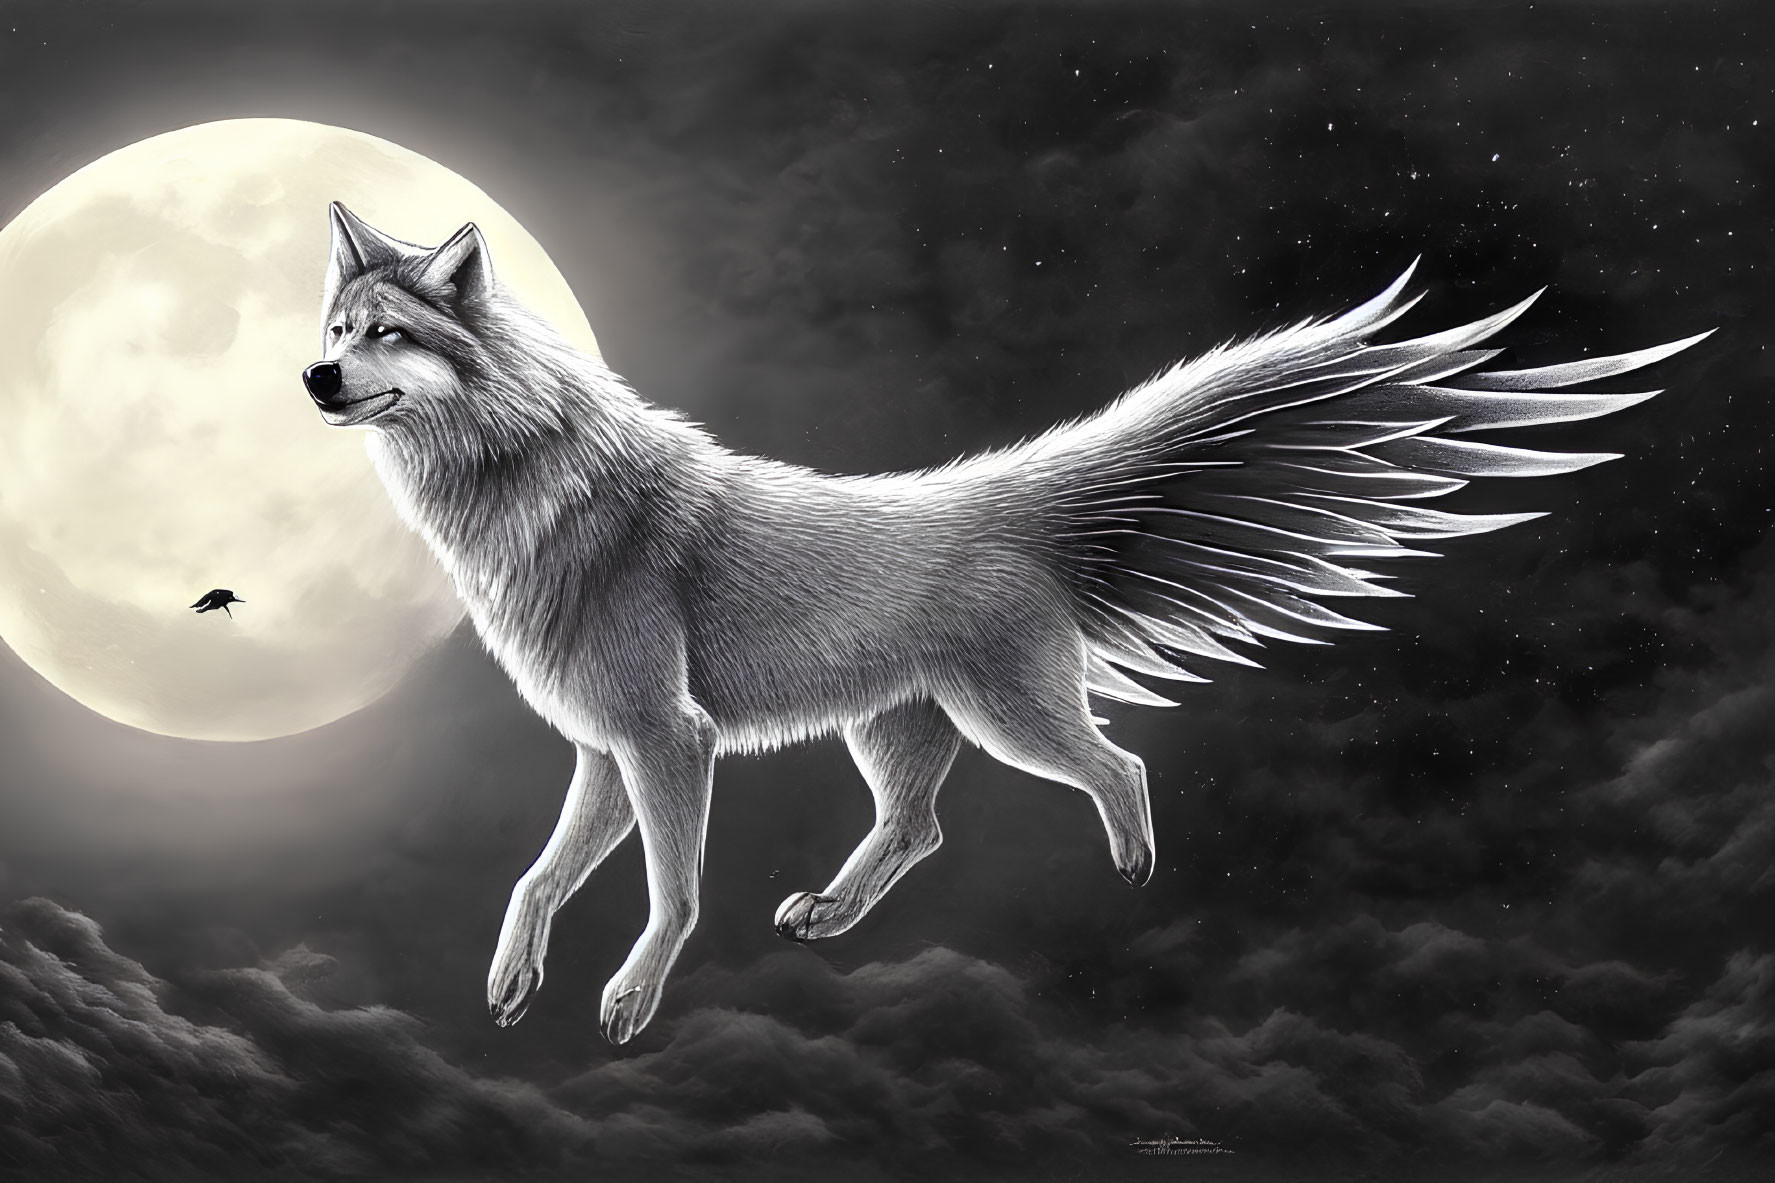 Winged wolf flying under full moon in fantasy scene